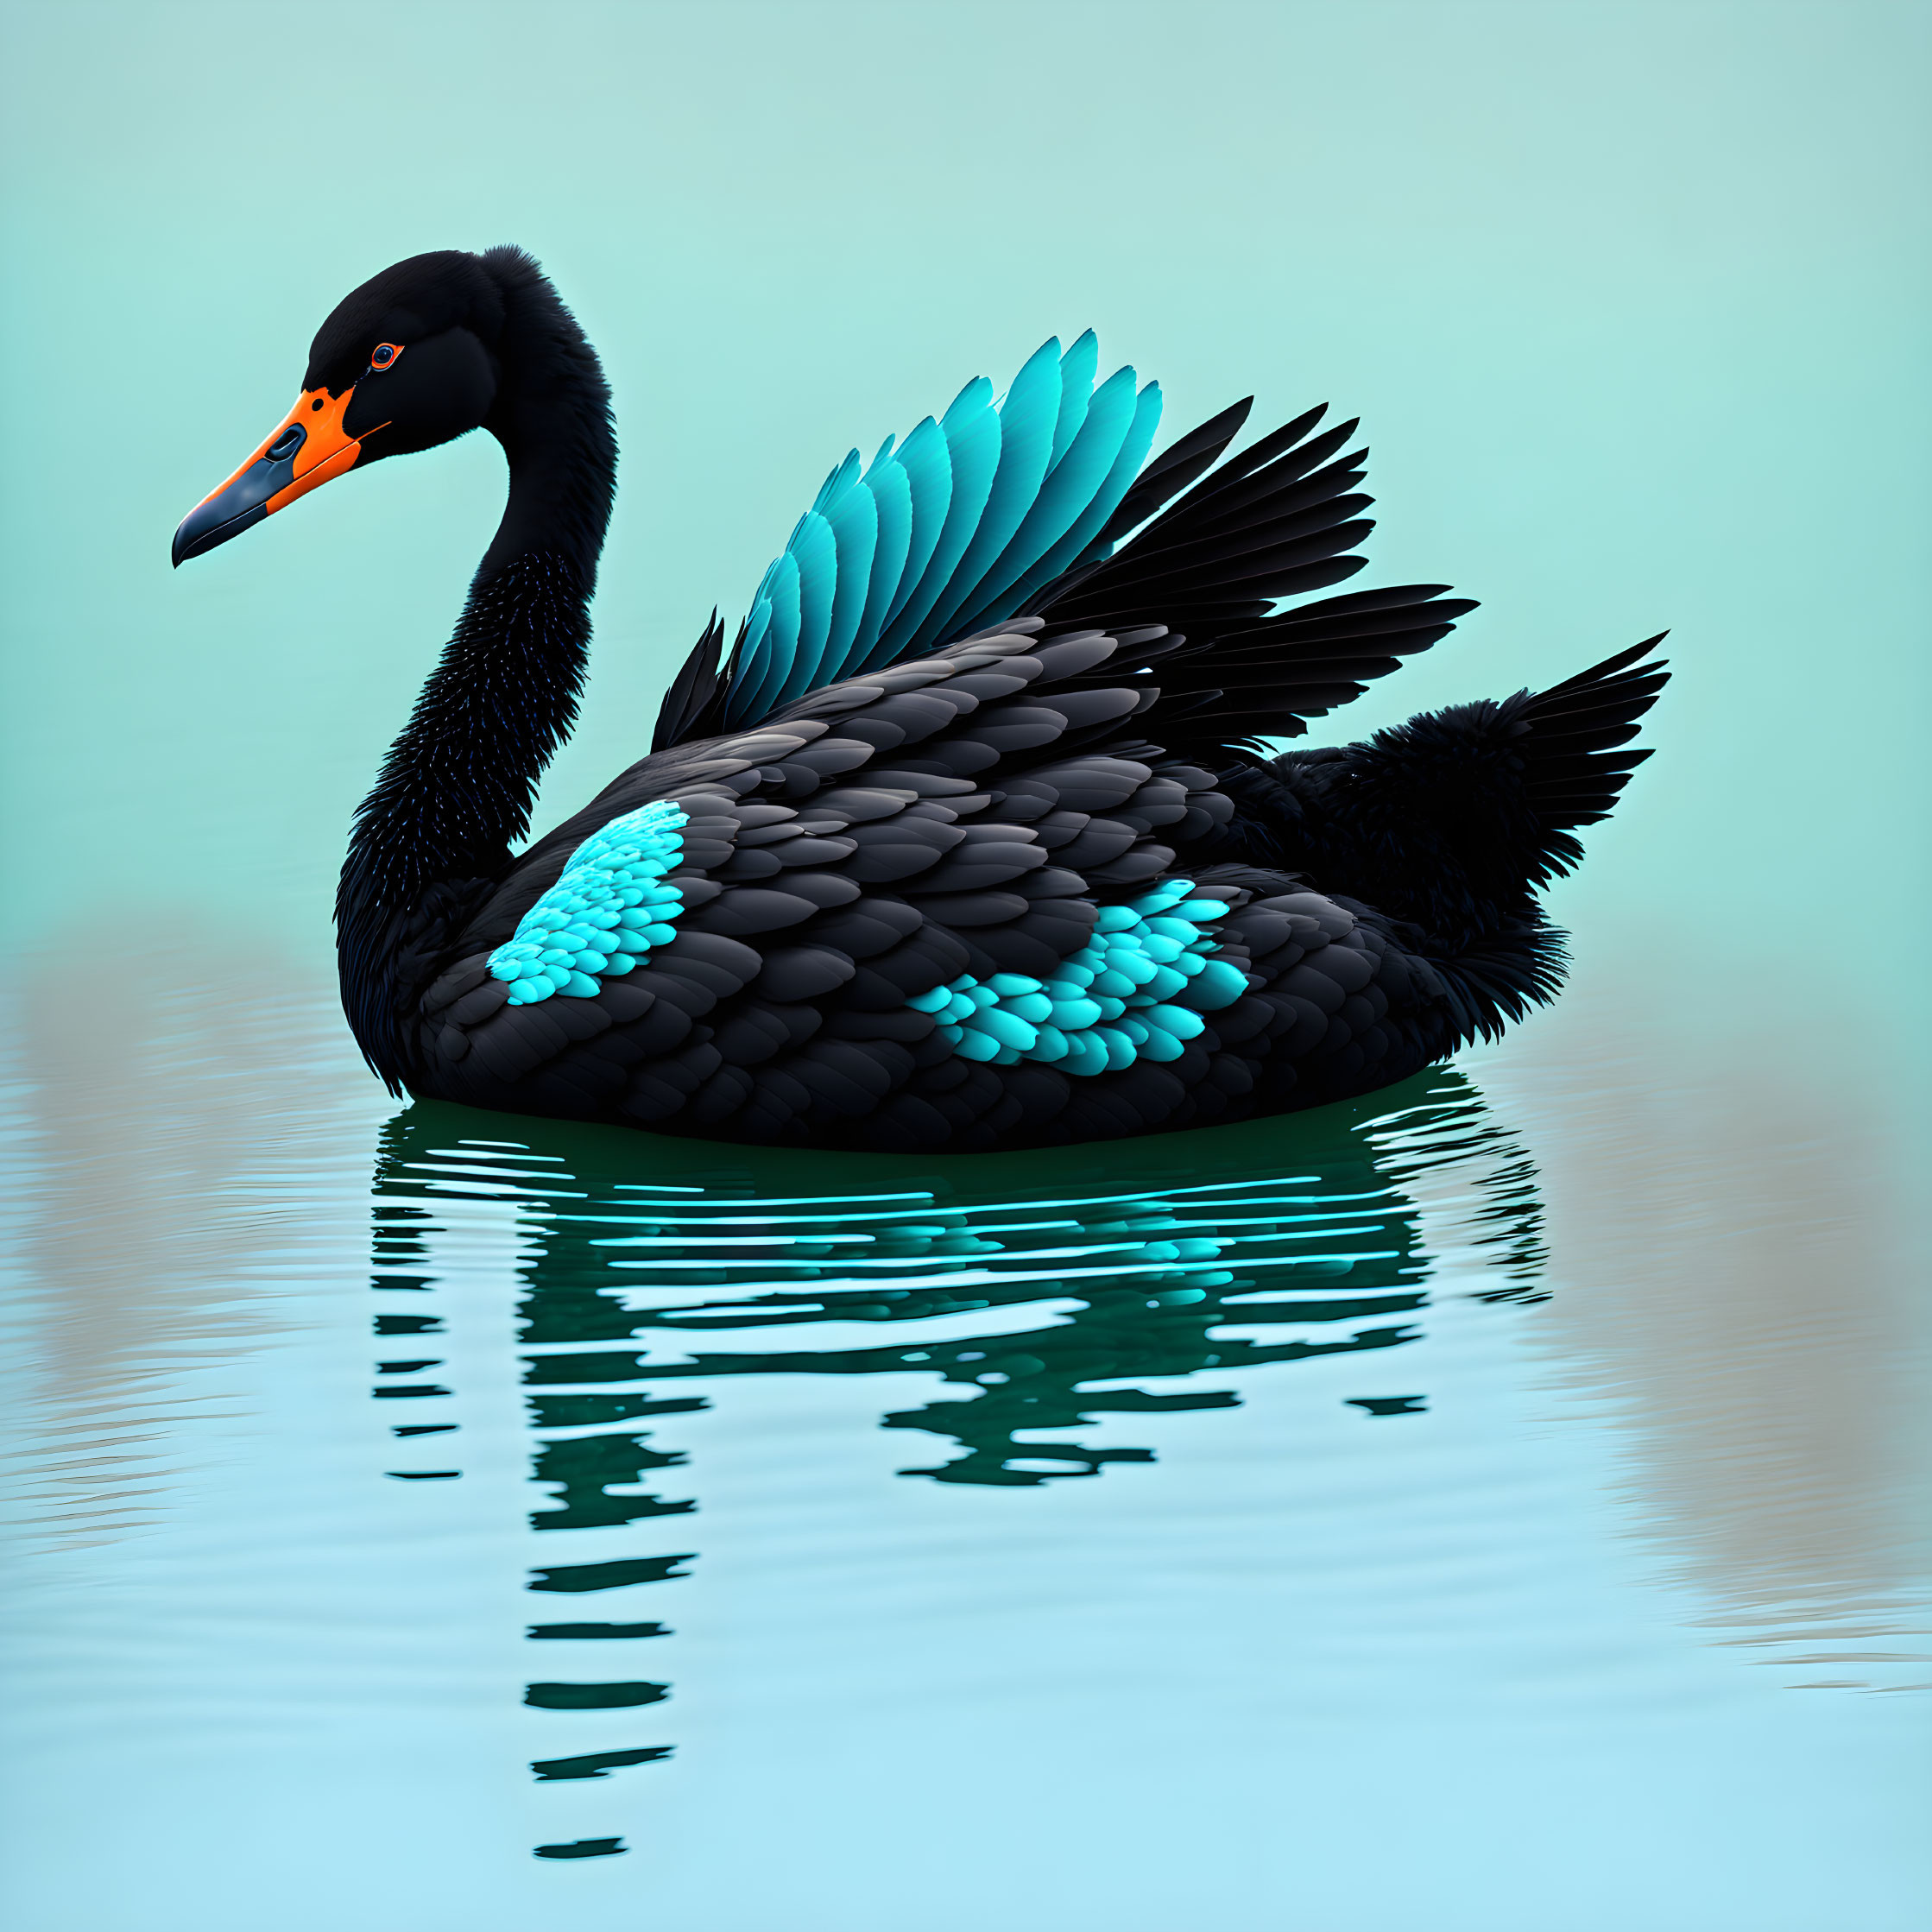 Black Swan on Lac Léman (dedicated to Misme)